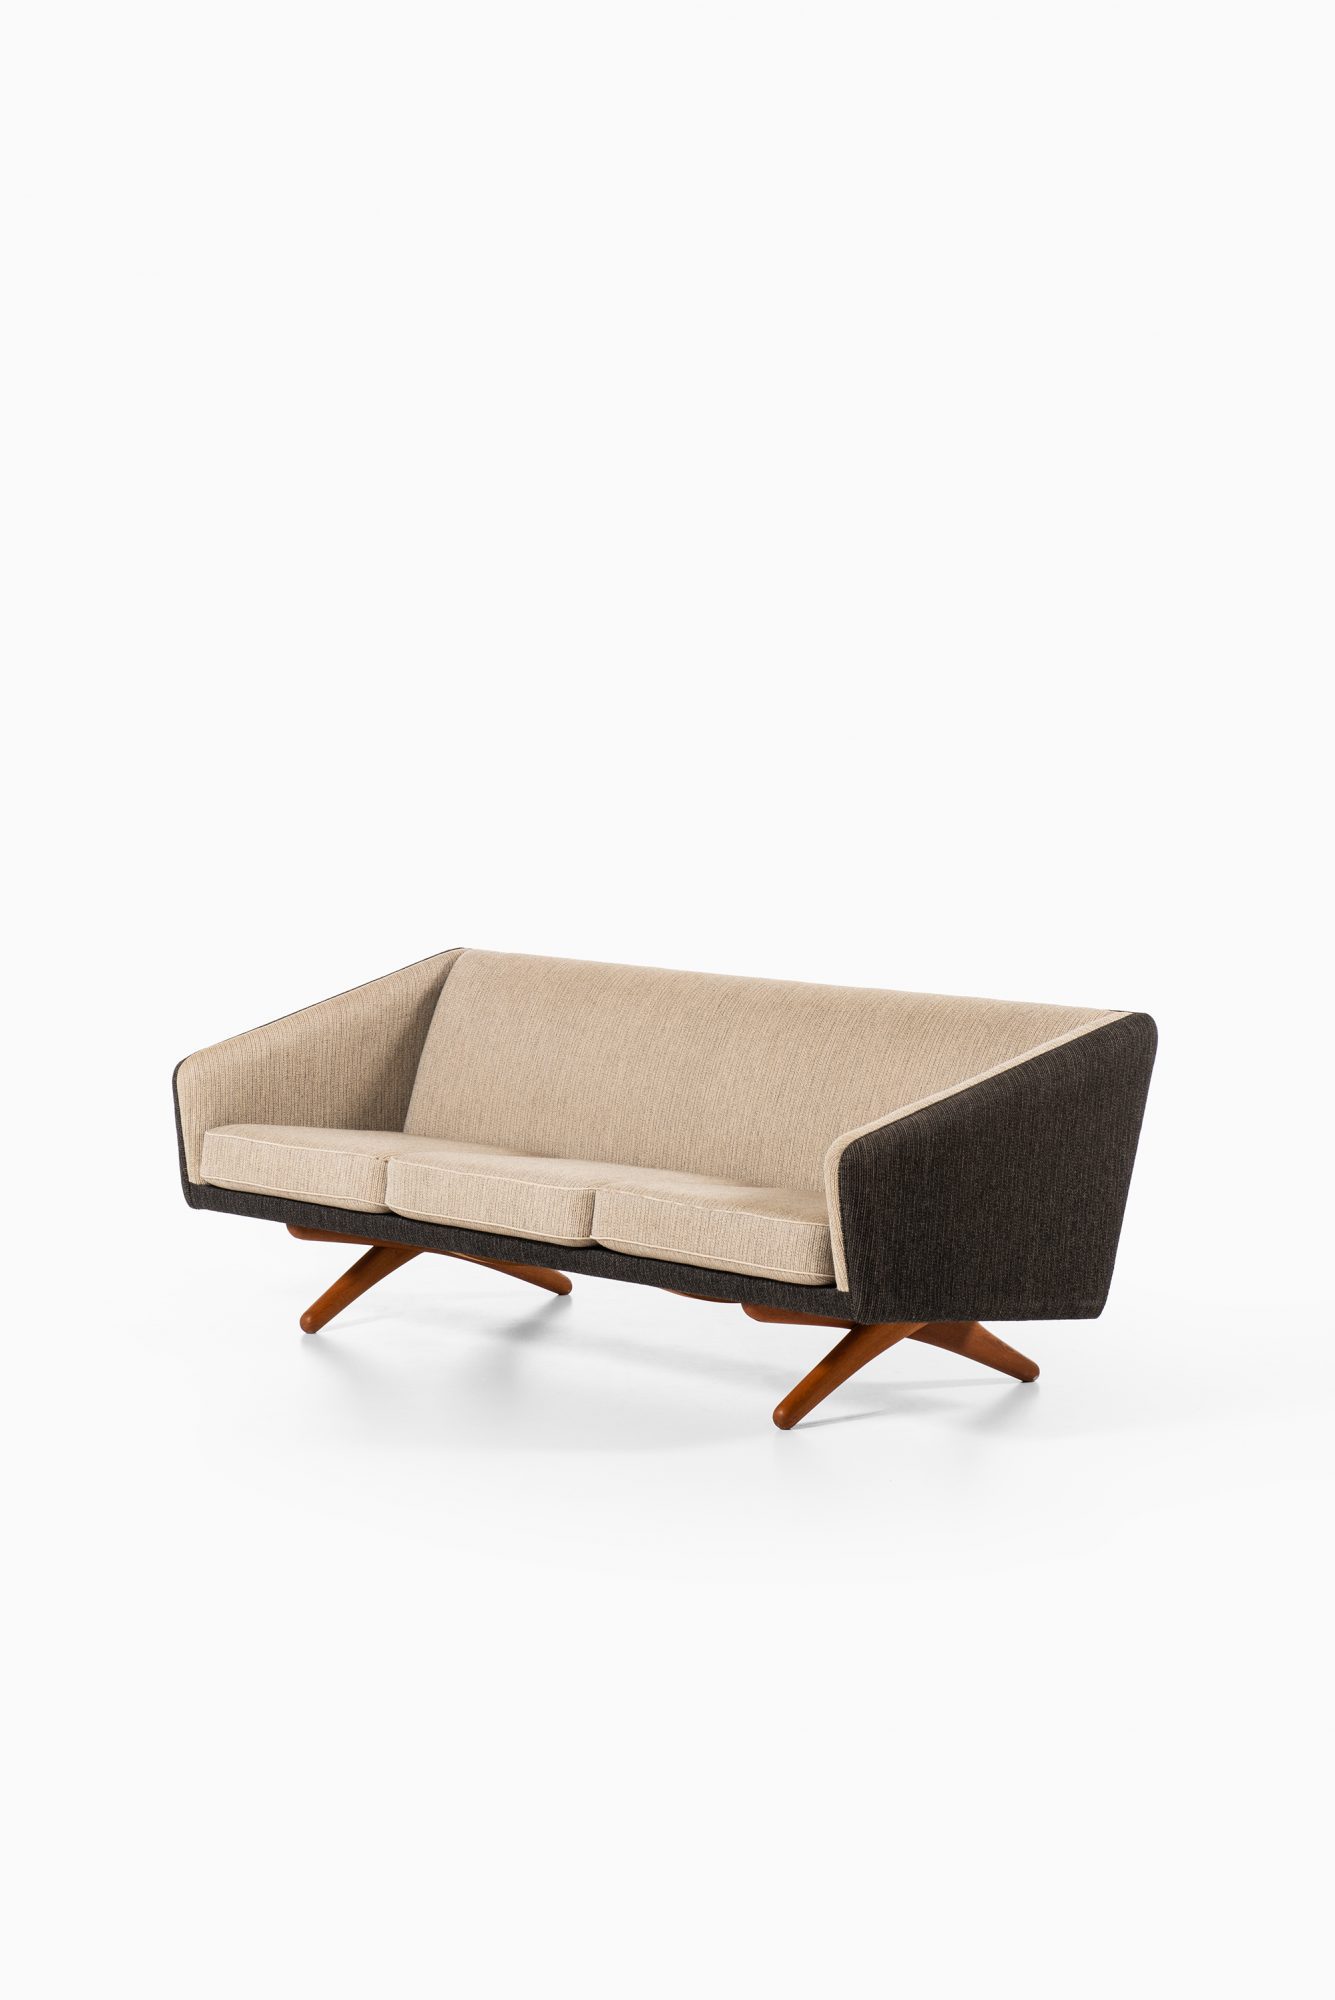 Illum Wikkelsø sofa by Michael Laursen at Studio Schalling